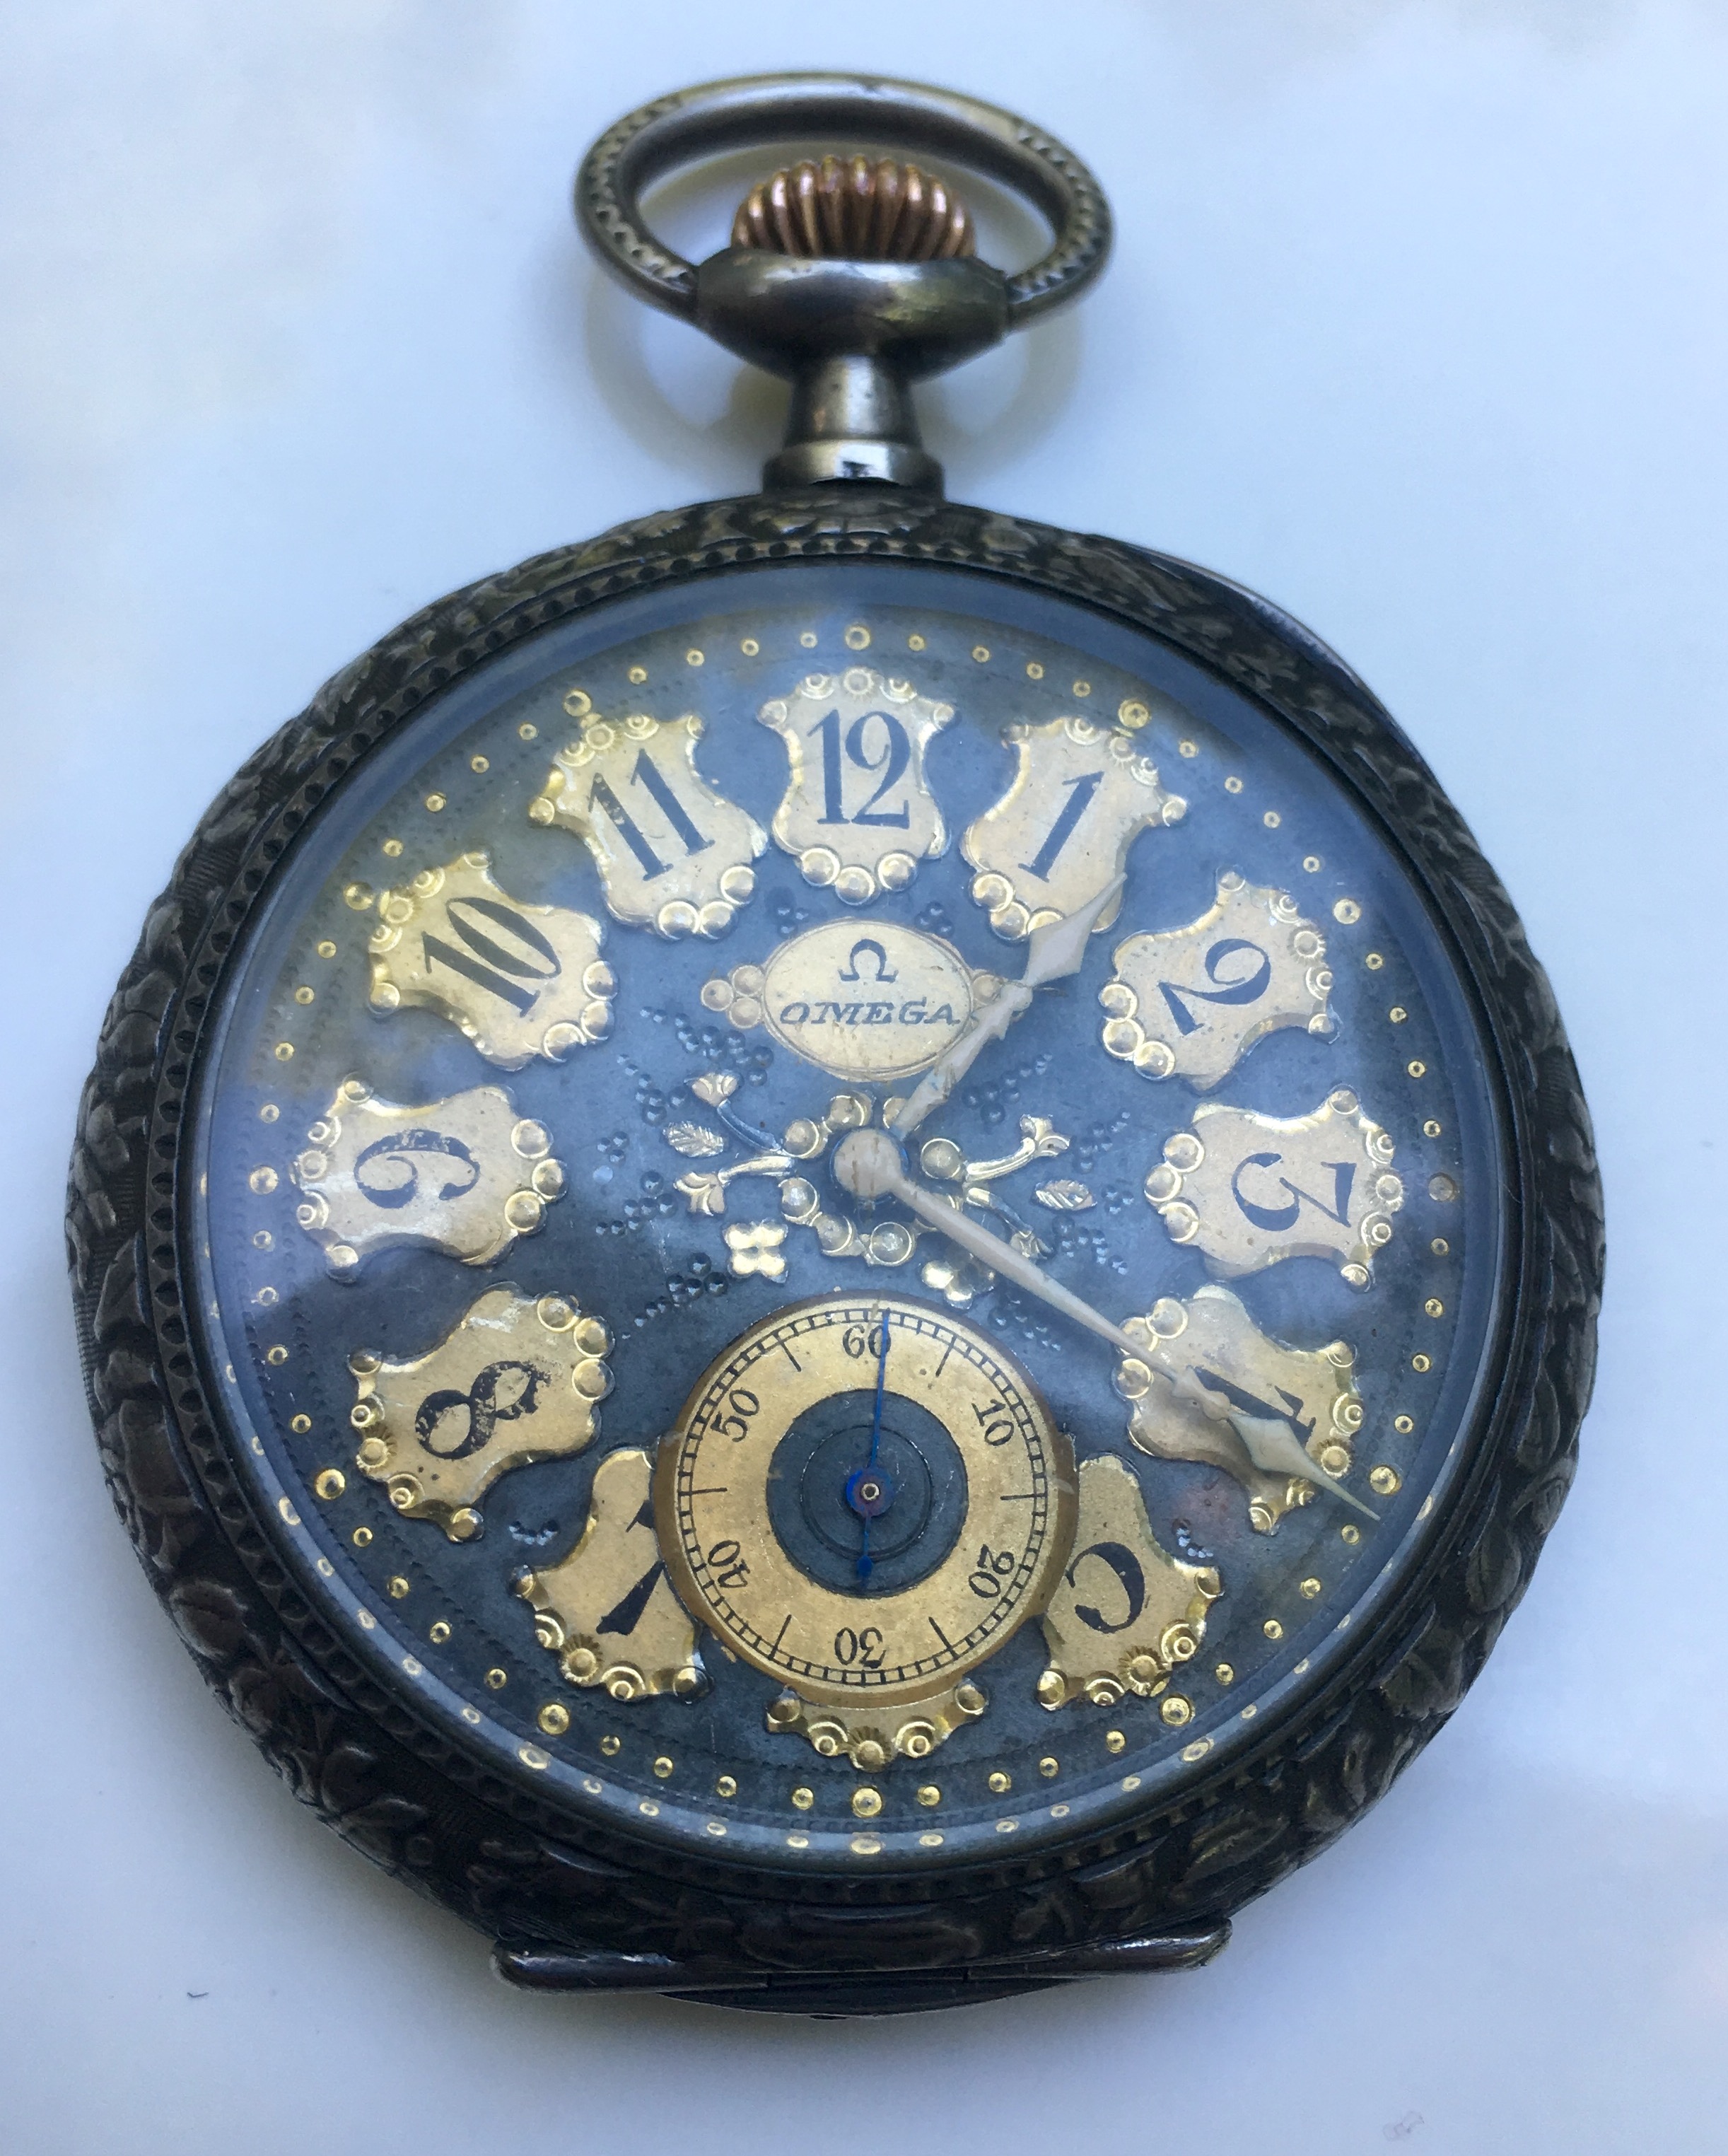 omega pocket watch 1900